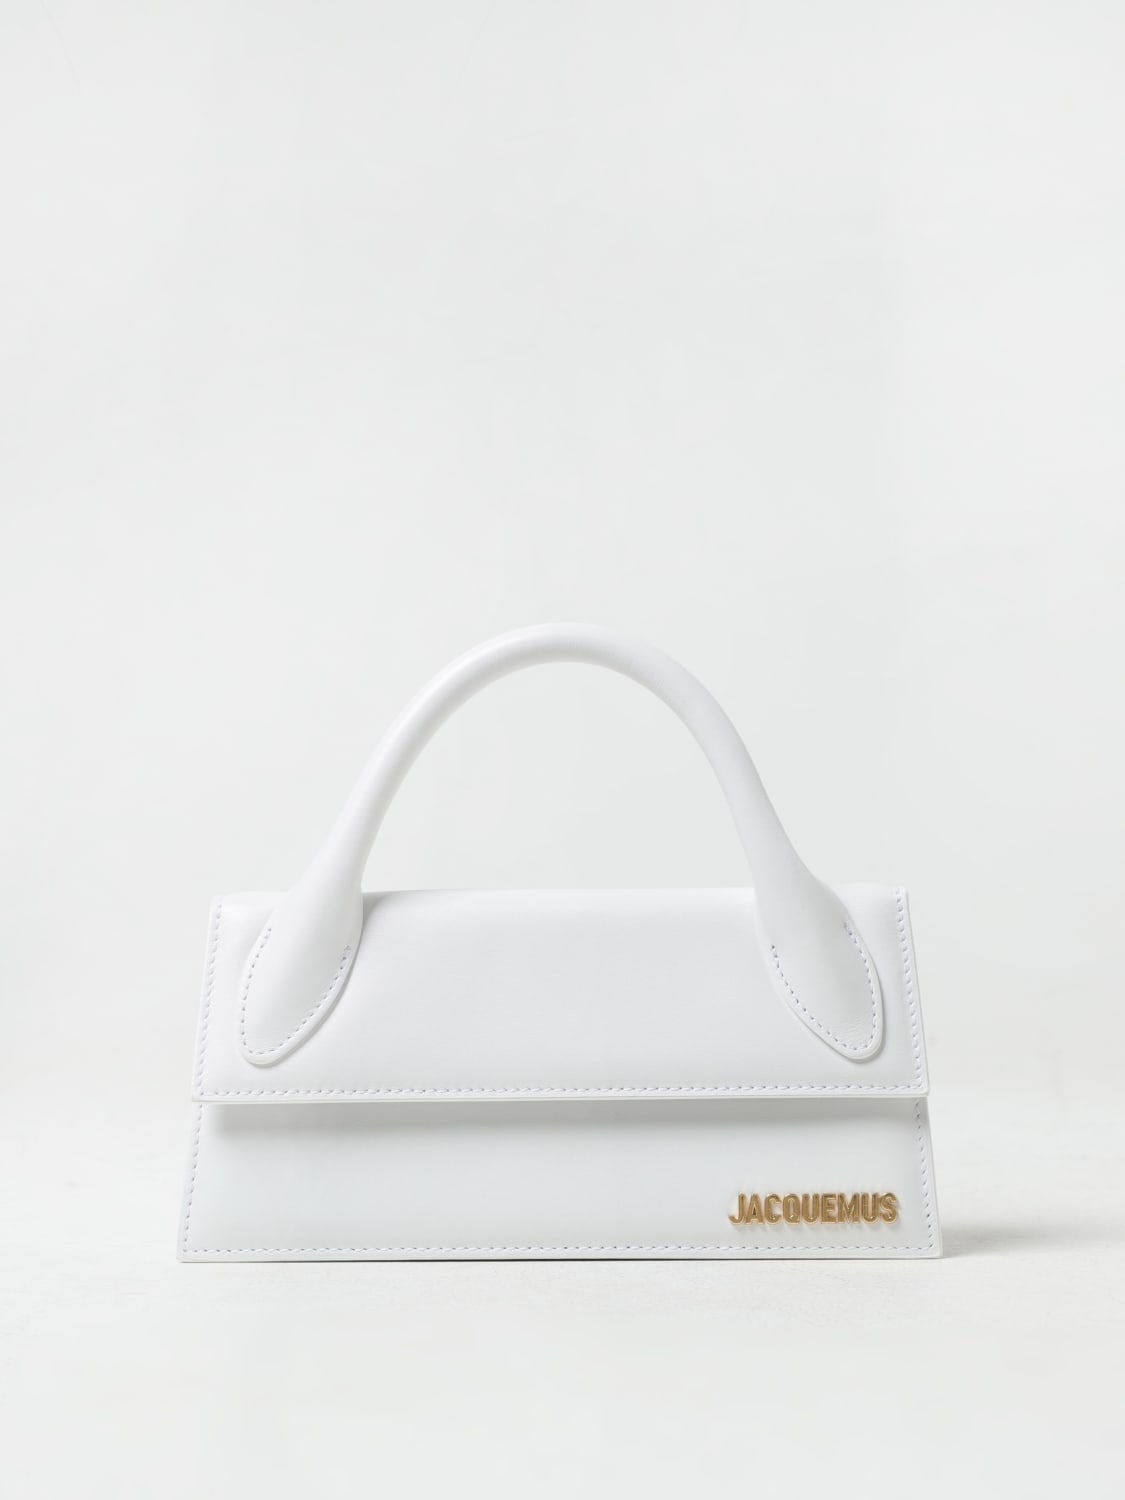 Jacquemus - Le Grand Chiquito White Bag